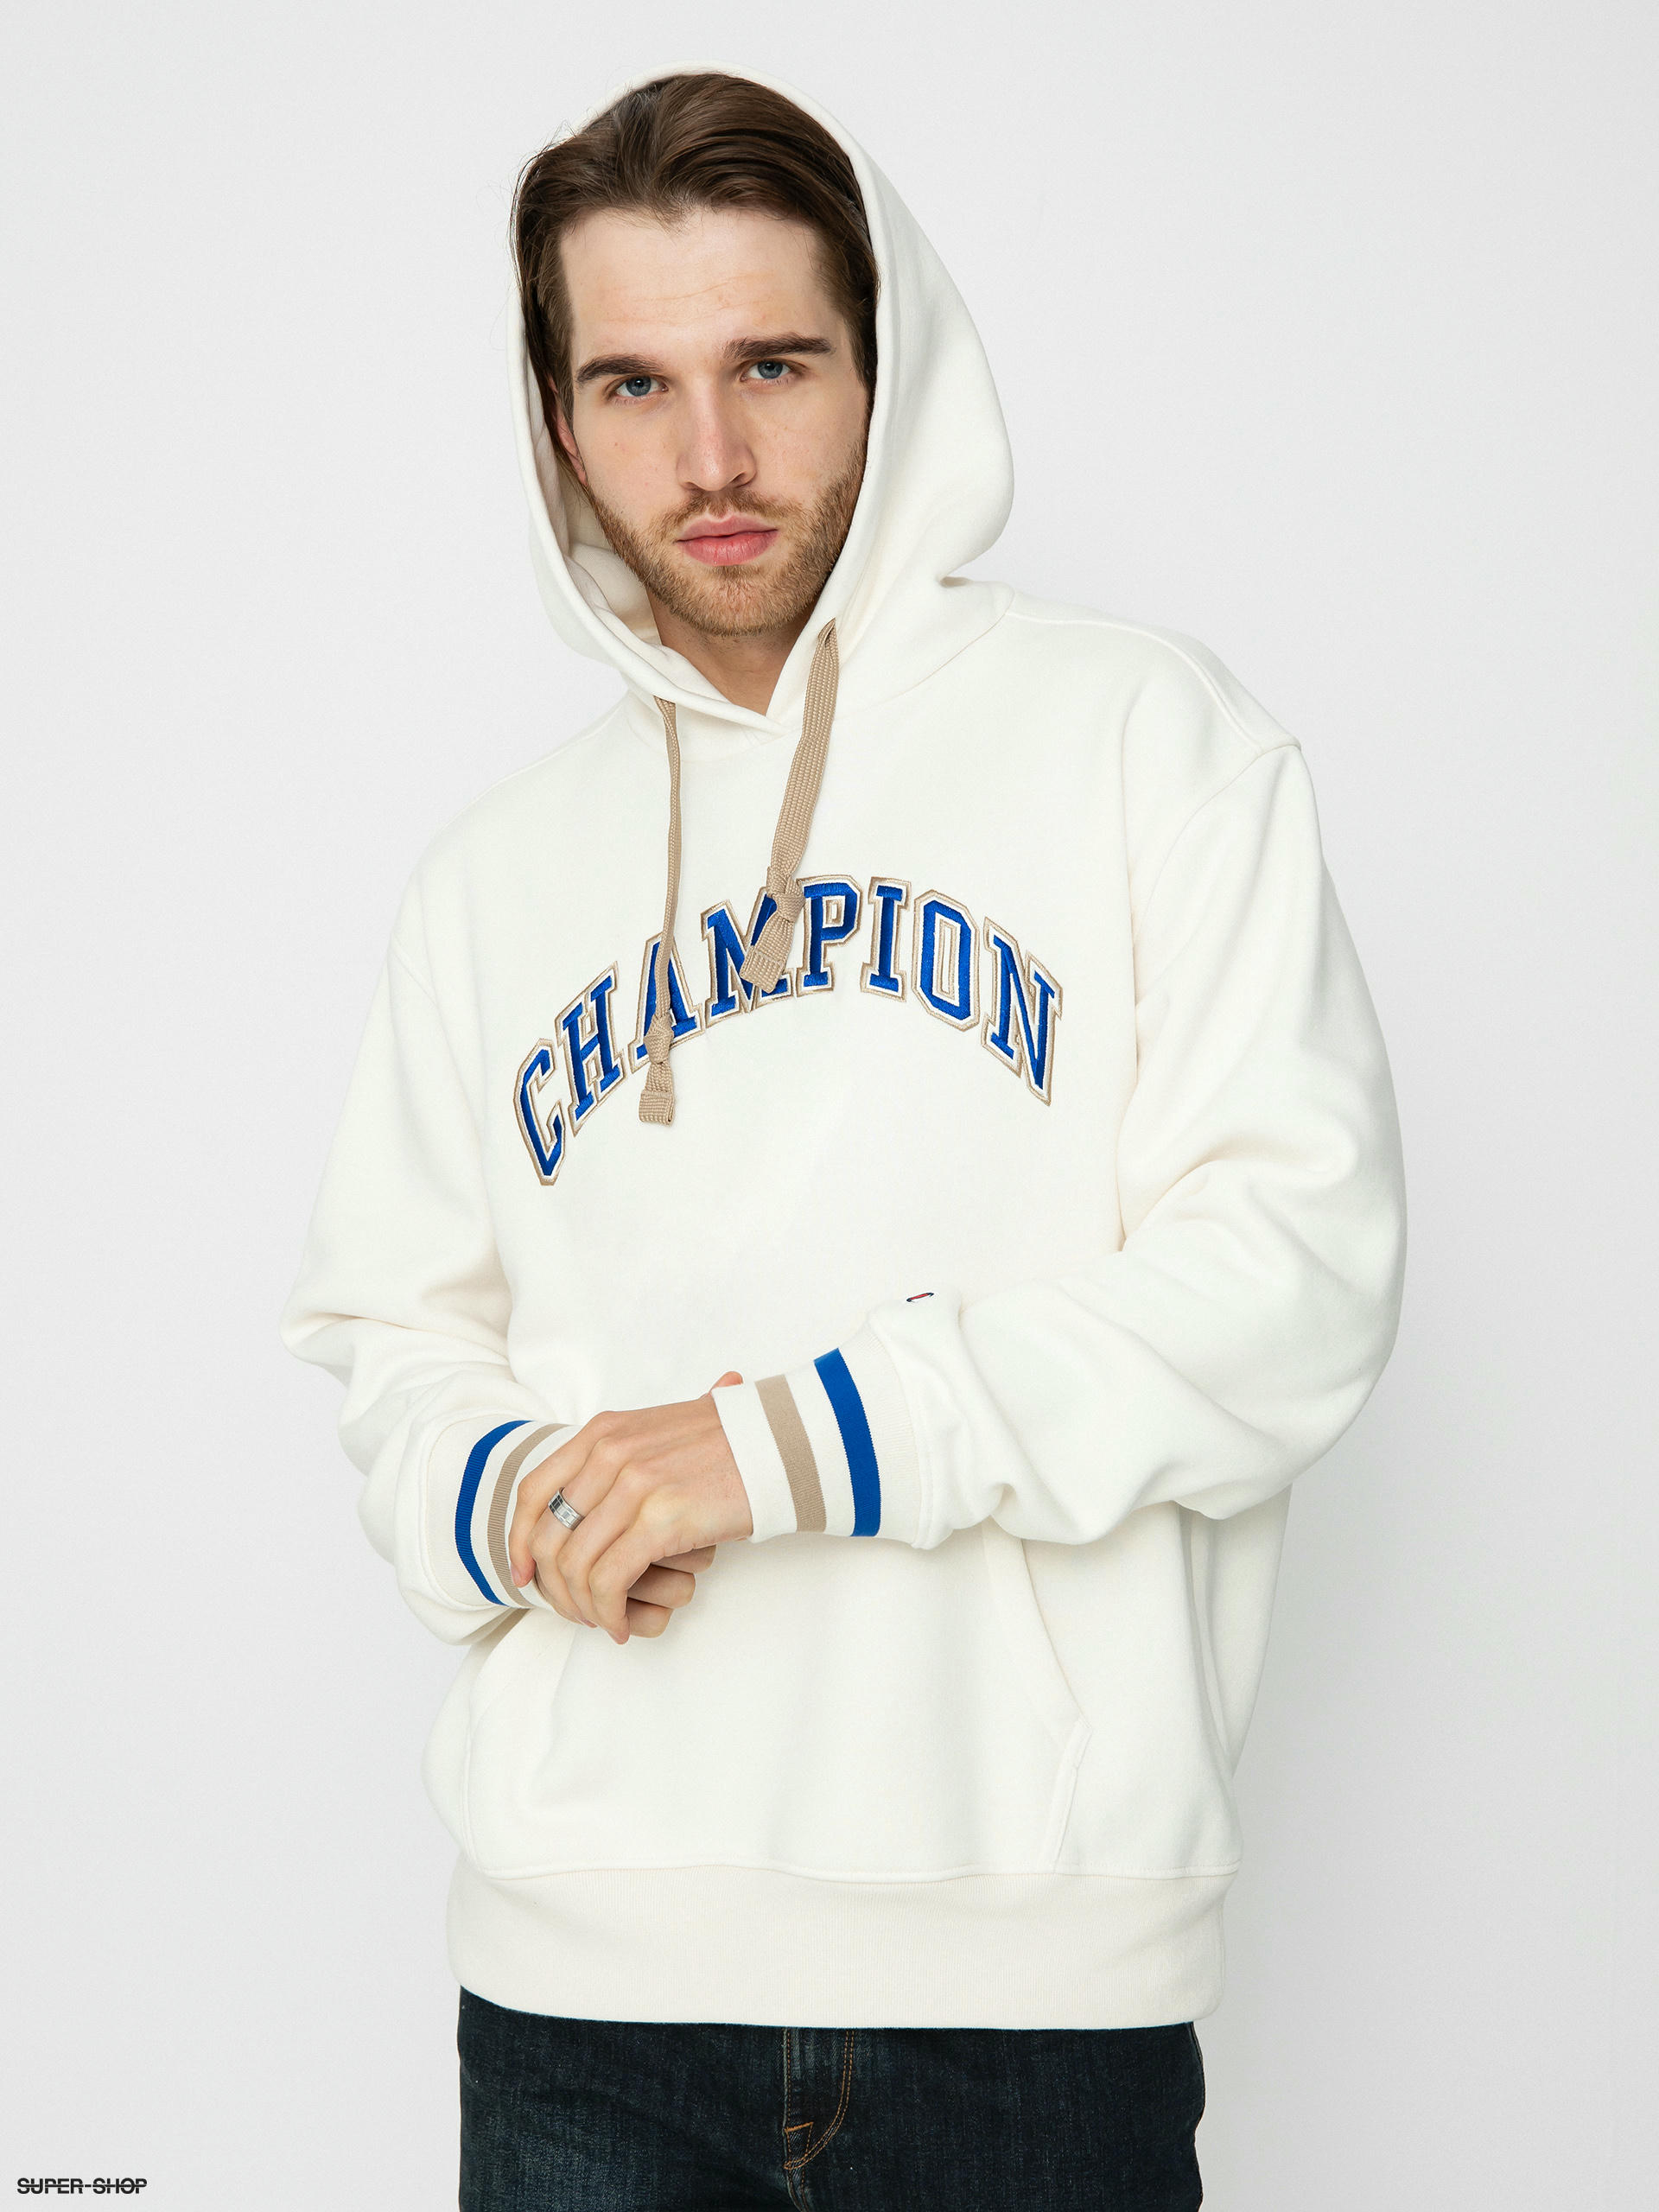 Champion Hooded Sweatshirt 219174 HD Hoodie (wsw)